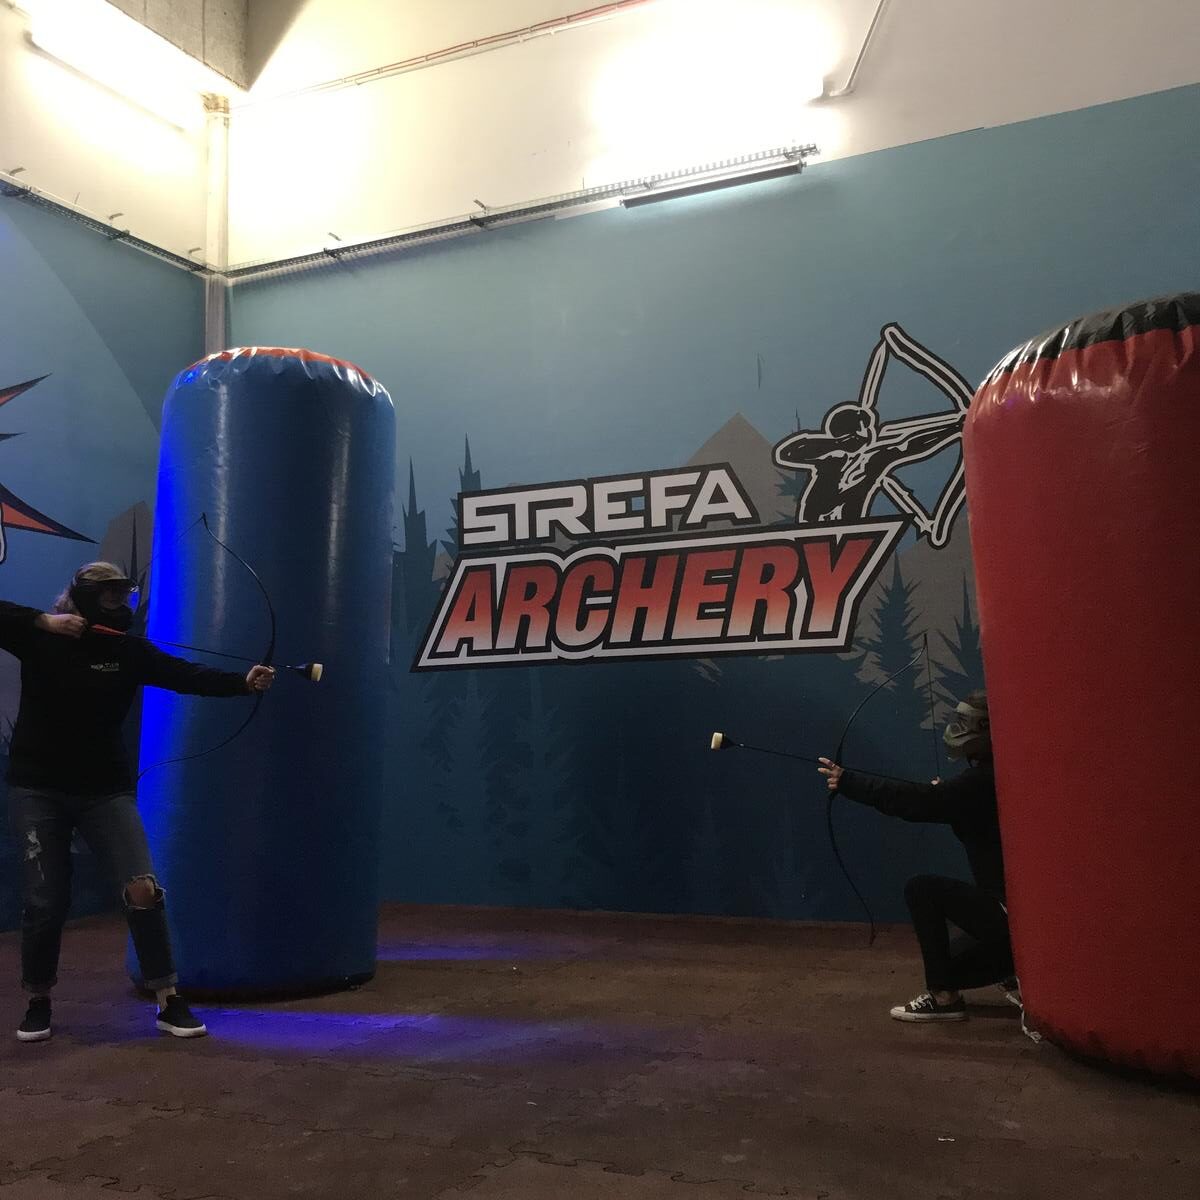 Archery Arena